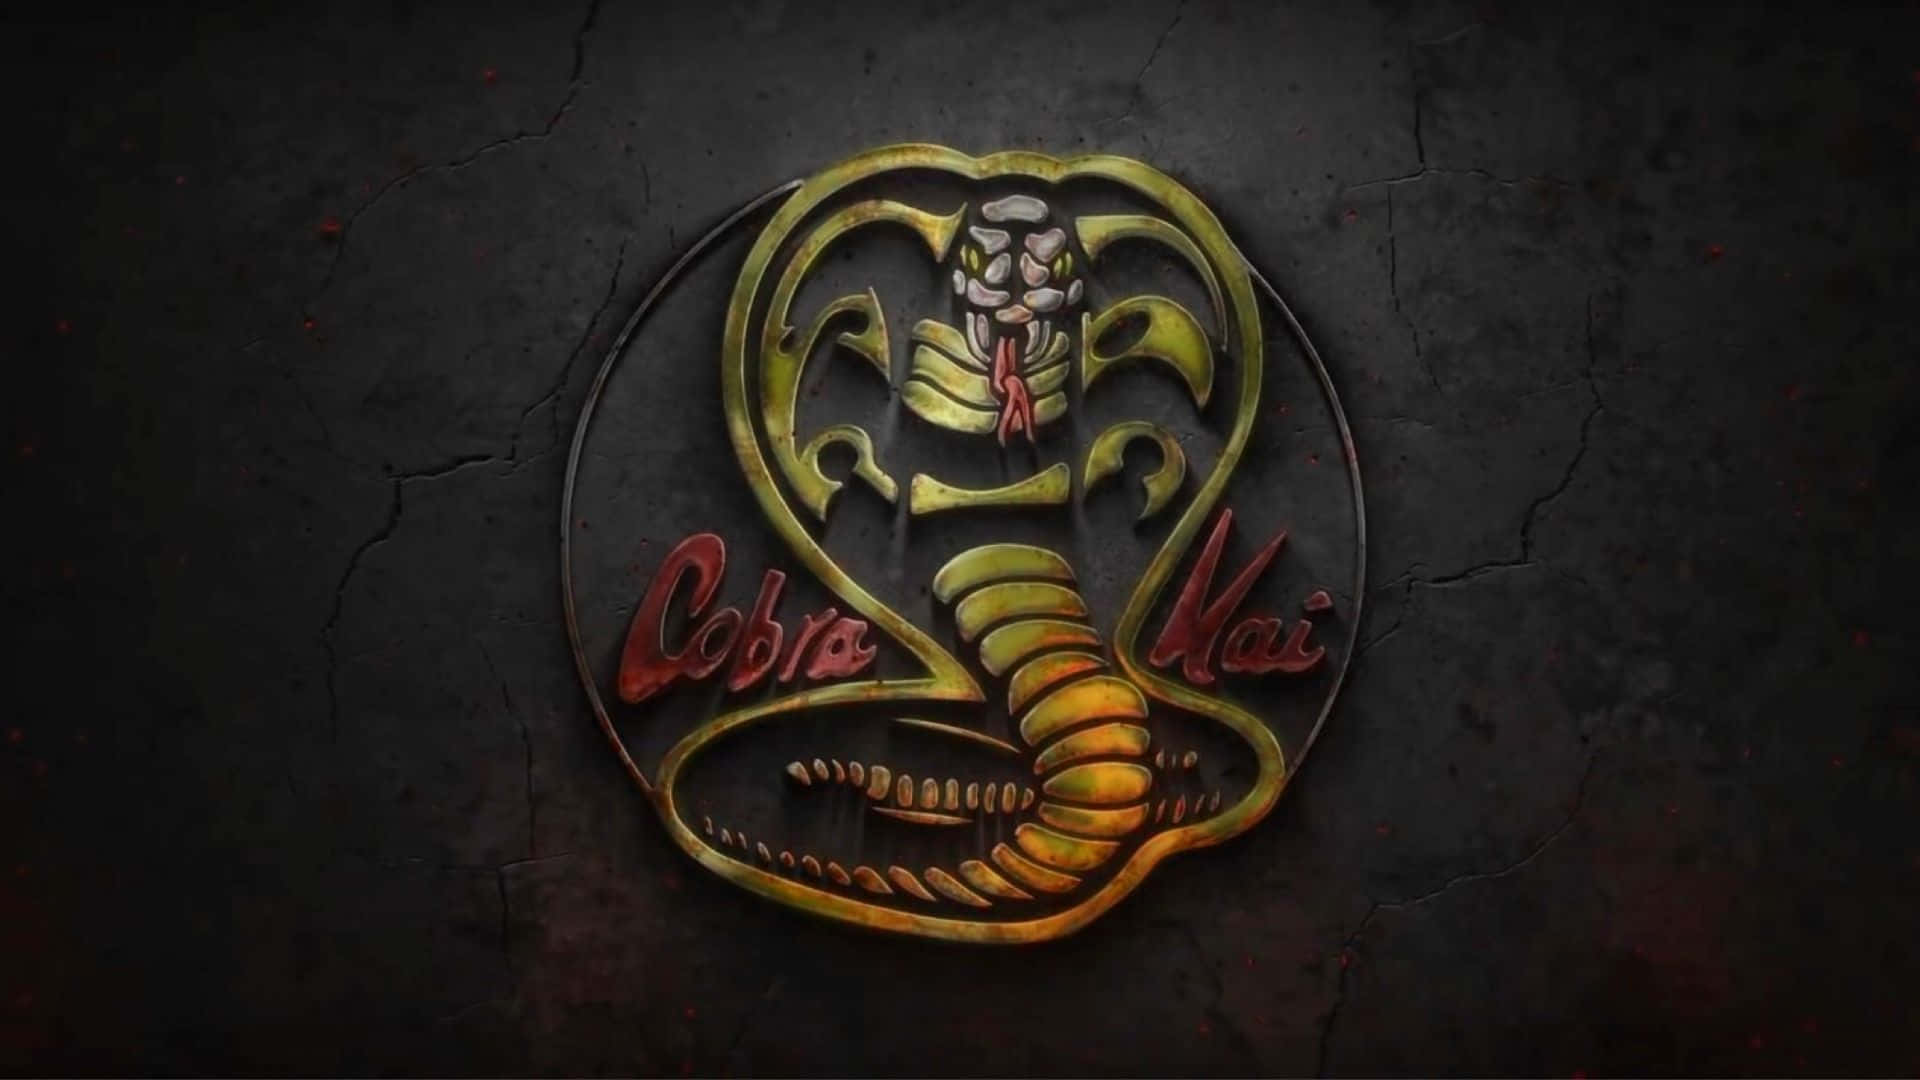 "Strike first. Strike hard. No mercy." - Cobra Kai